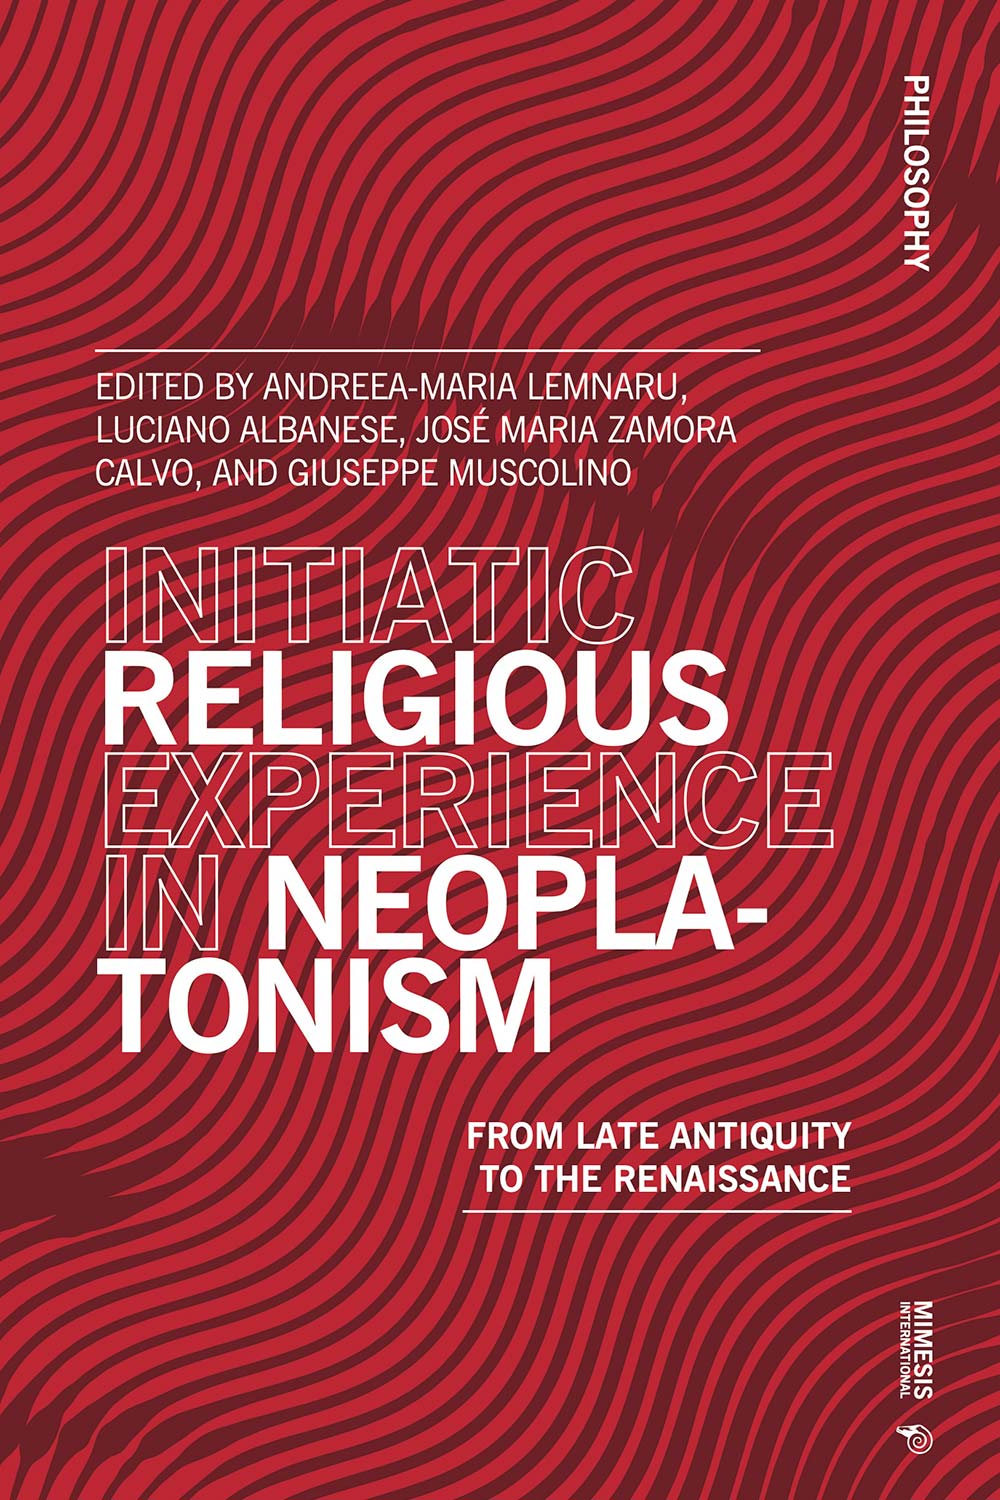 Imagen de portada del libro Initiatic religious experience in Neoplatonism